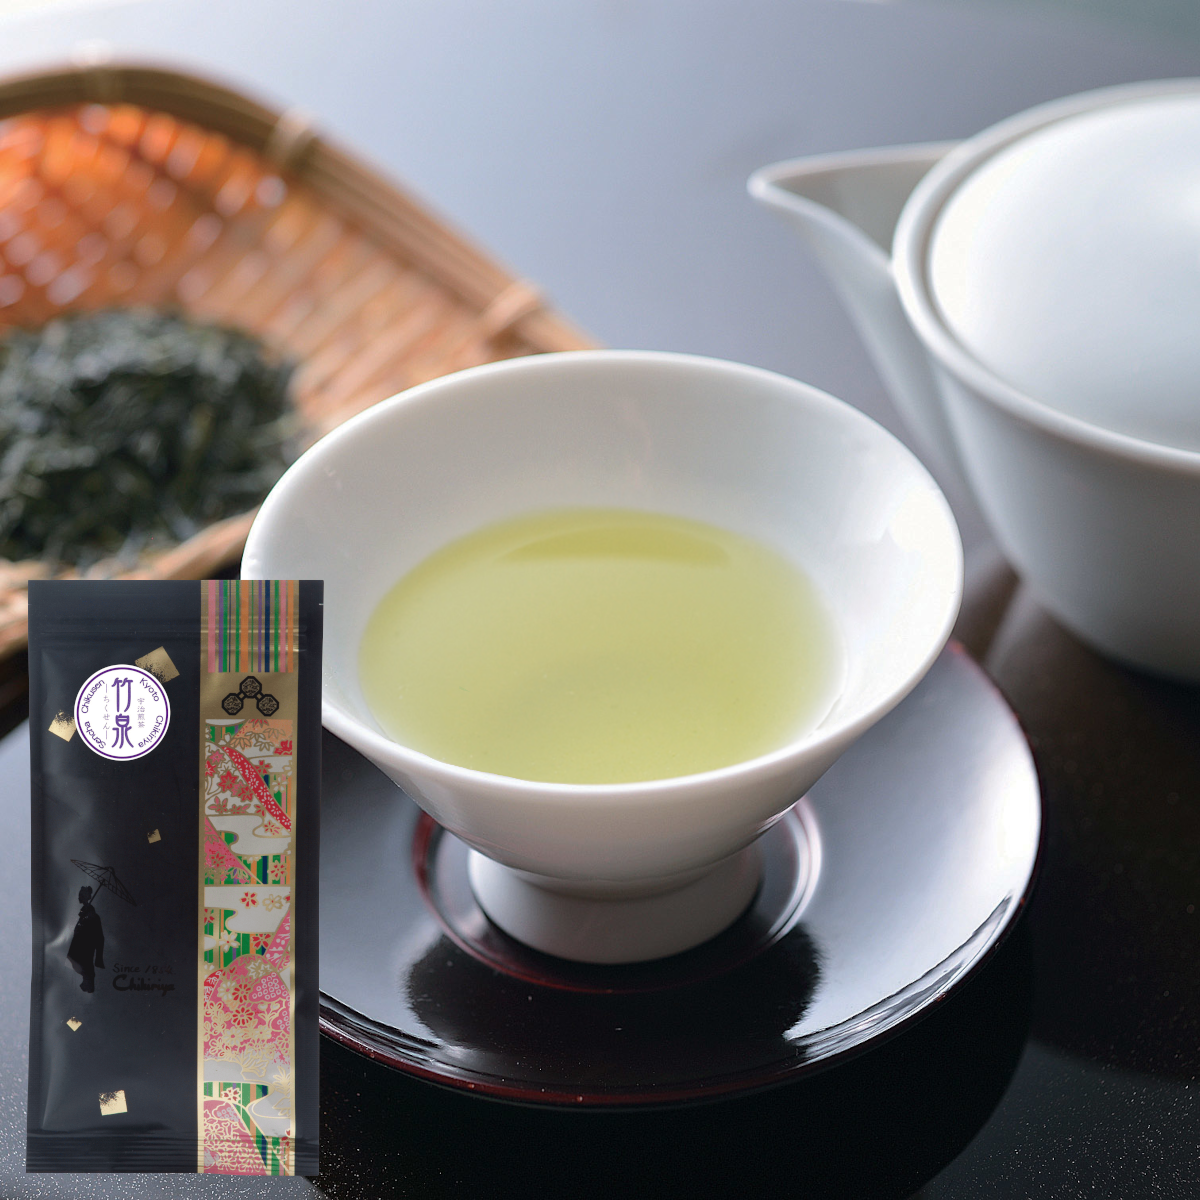 Uji Sencha "Chikusen" (Japanese green tea from Uji) - 100g tea leaves